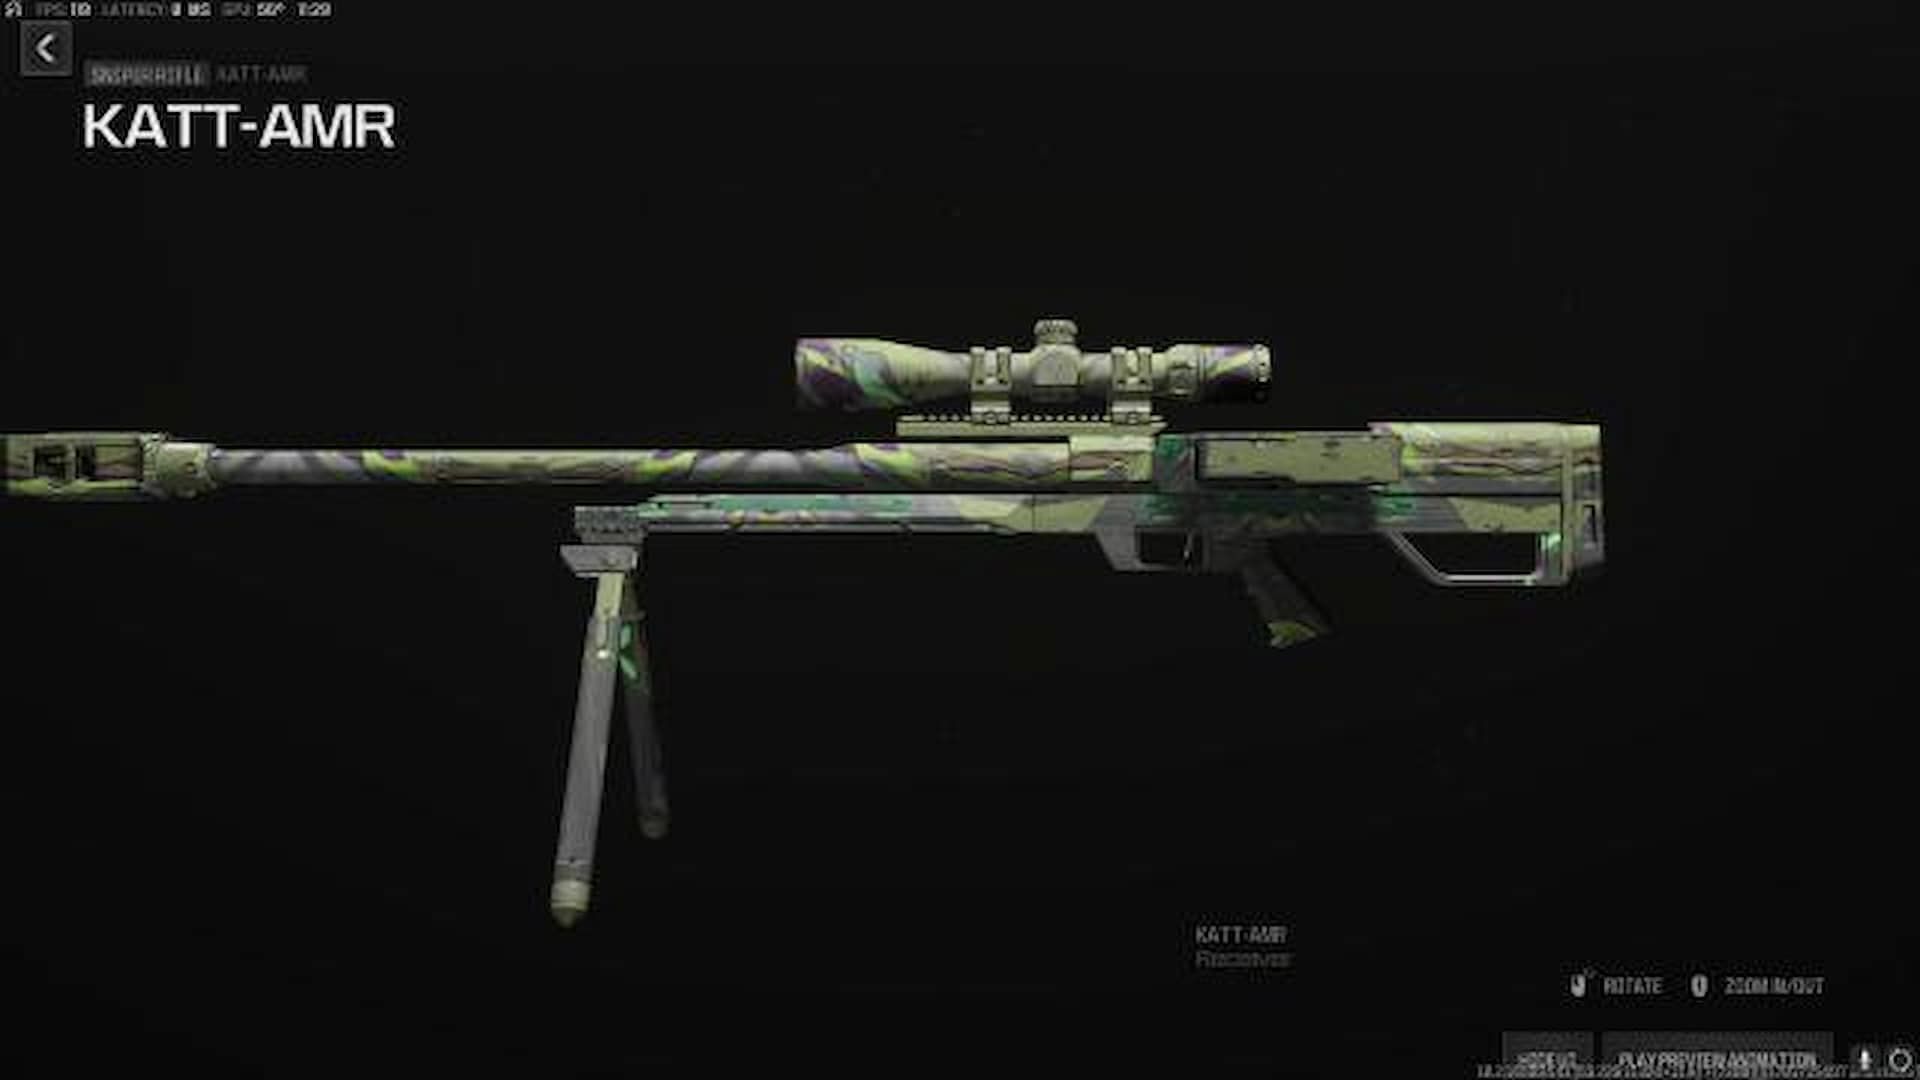 The KATT-AMR sniper in Warzone (Image via Activision)